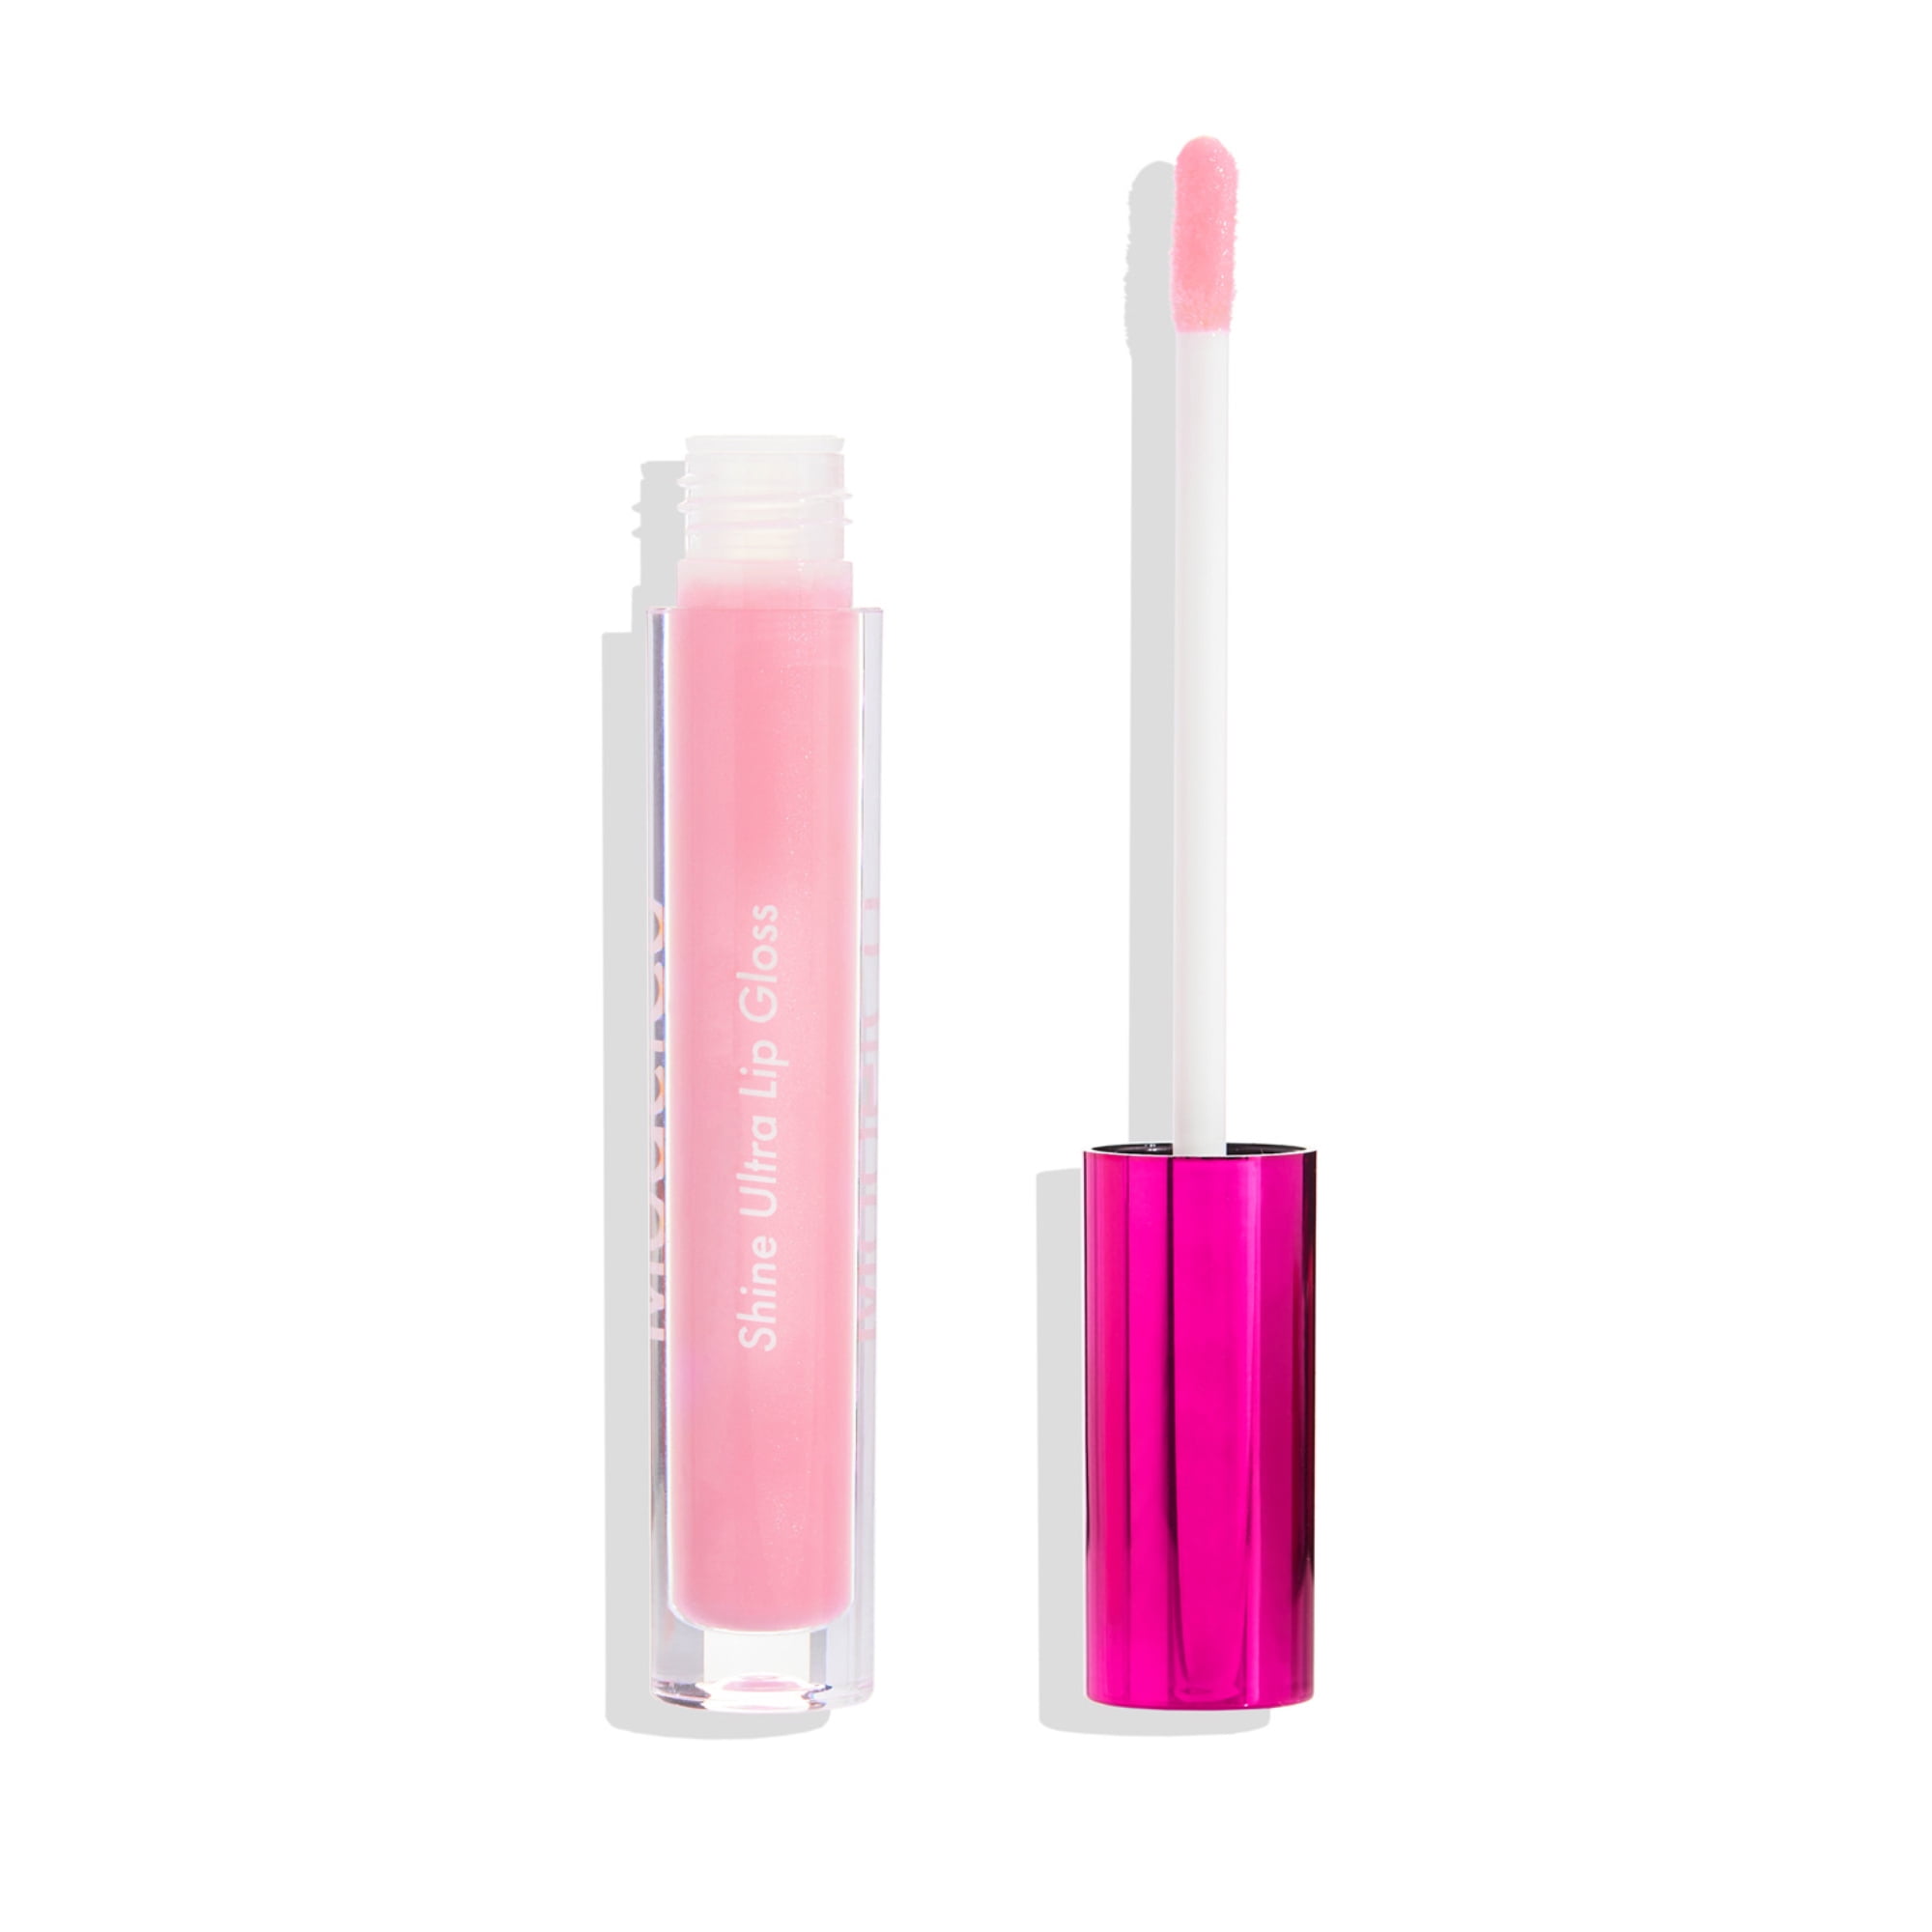 ModelCo Shine Ultra Lip Gloss - Marshmallow, Plumping Gloss, 0.17 oz